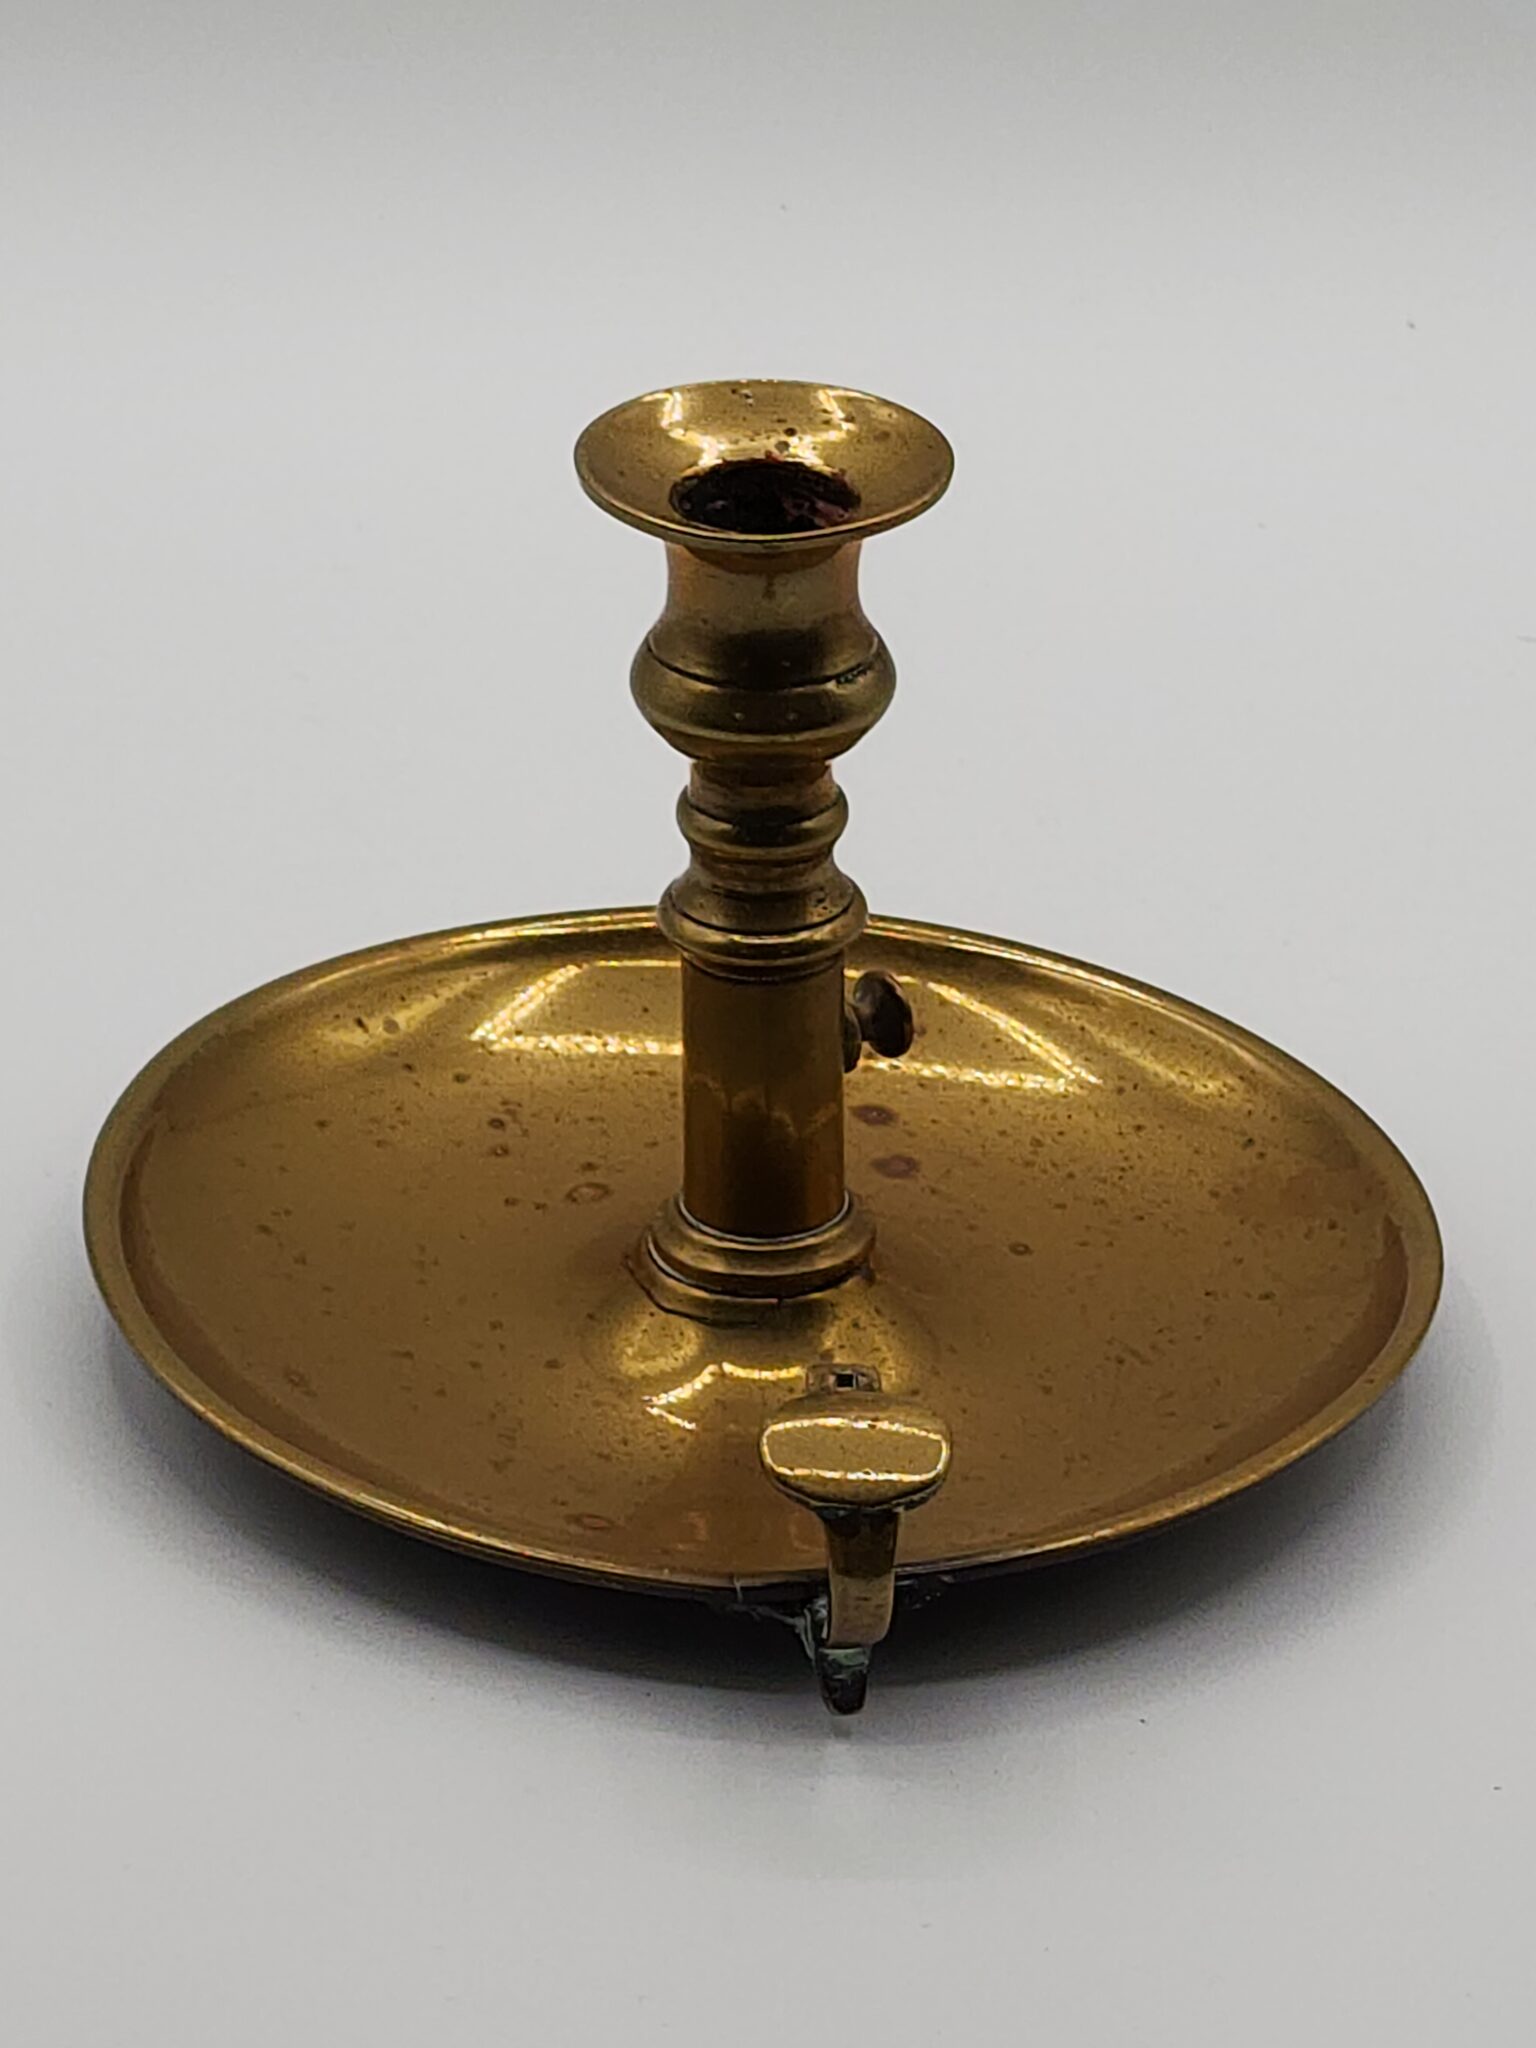 Antique English Brass Chamberstick English Antiques - Caledonian, Inc.  Barrington, Il - 60010 (847) 381-0569